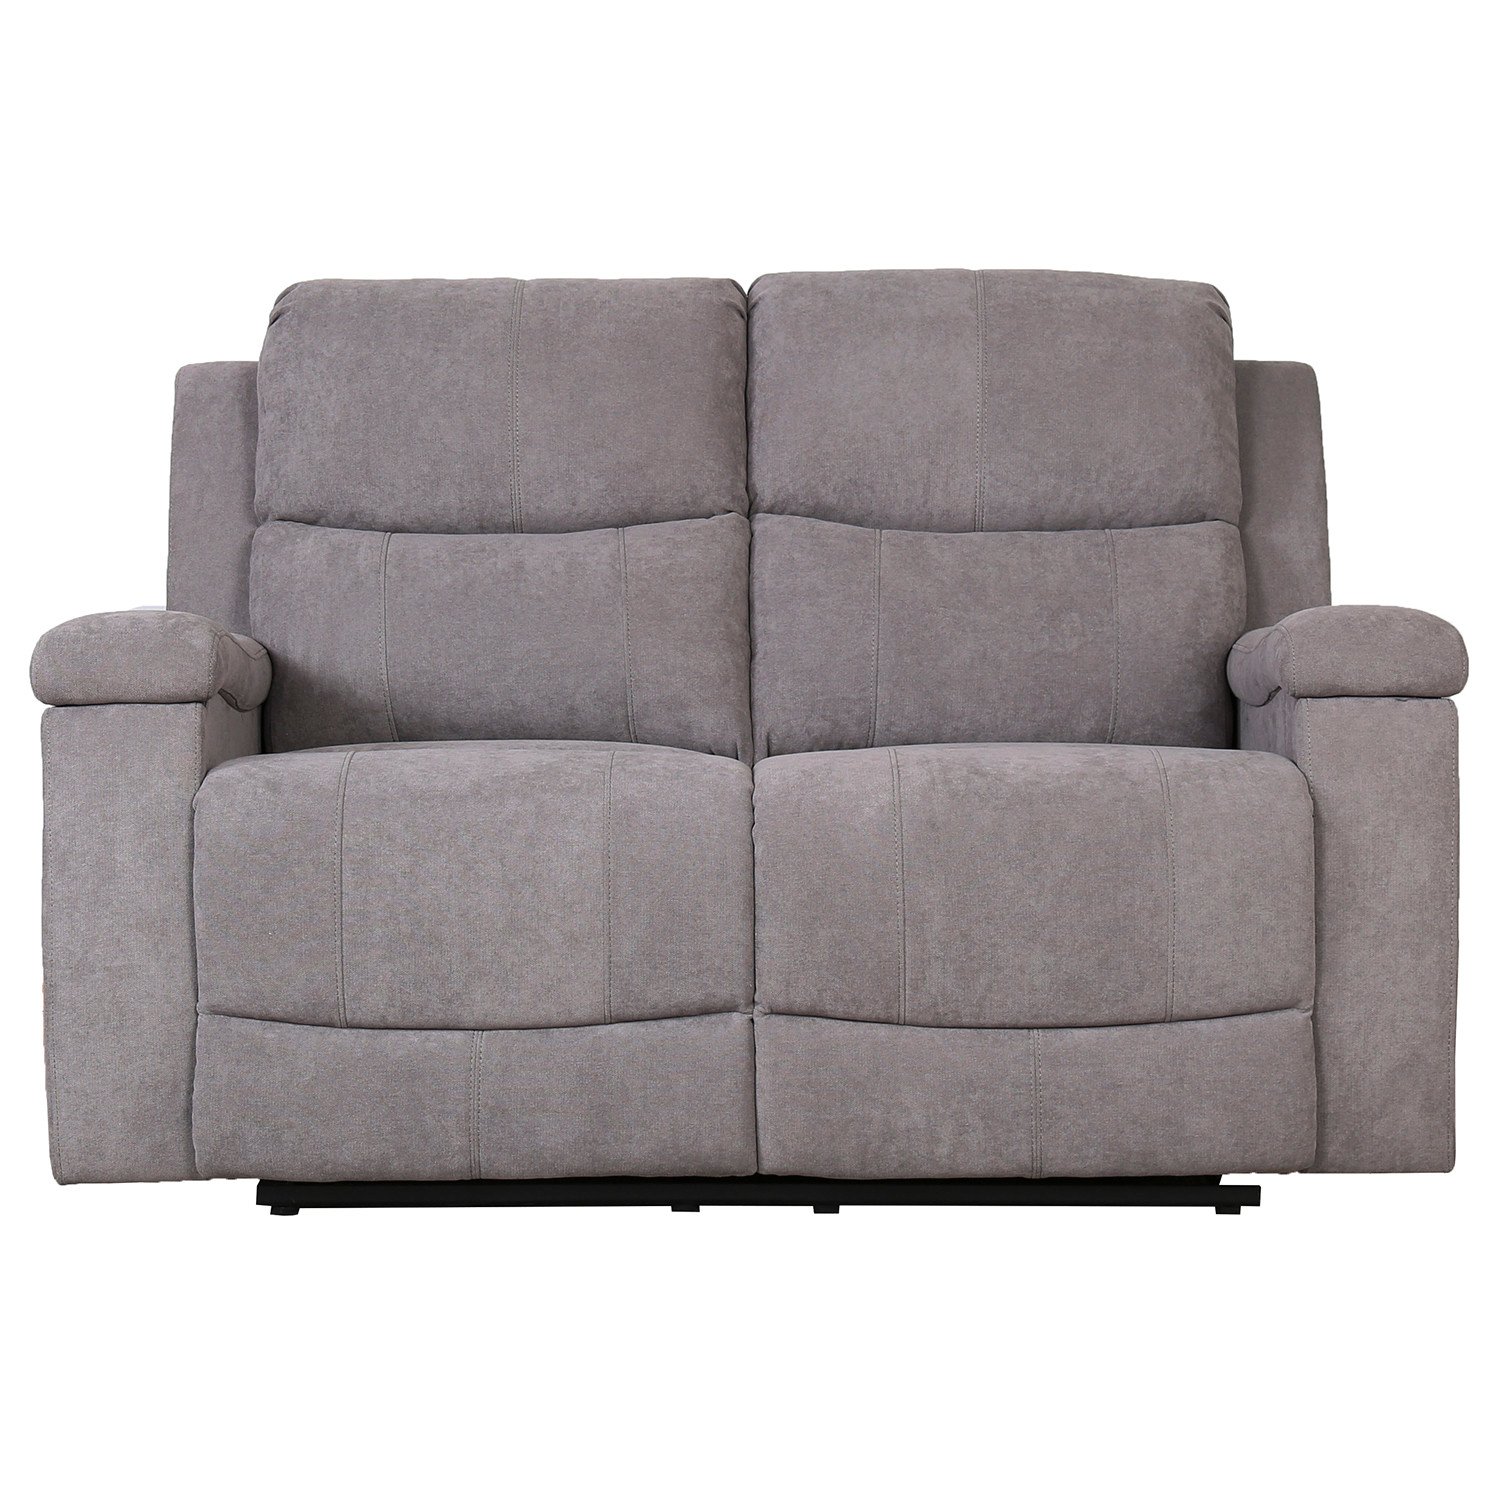 Ledbury 2 Seater Grey Fabric Manual Recliner Sofa Image 3